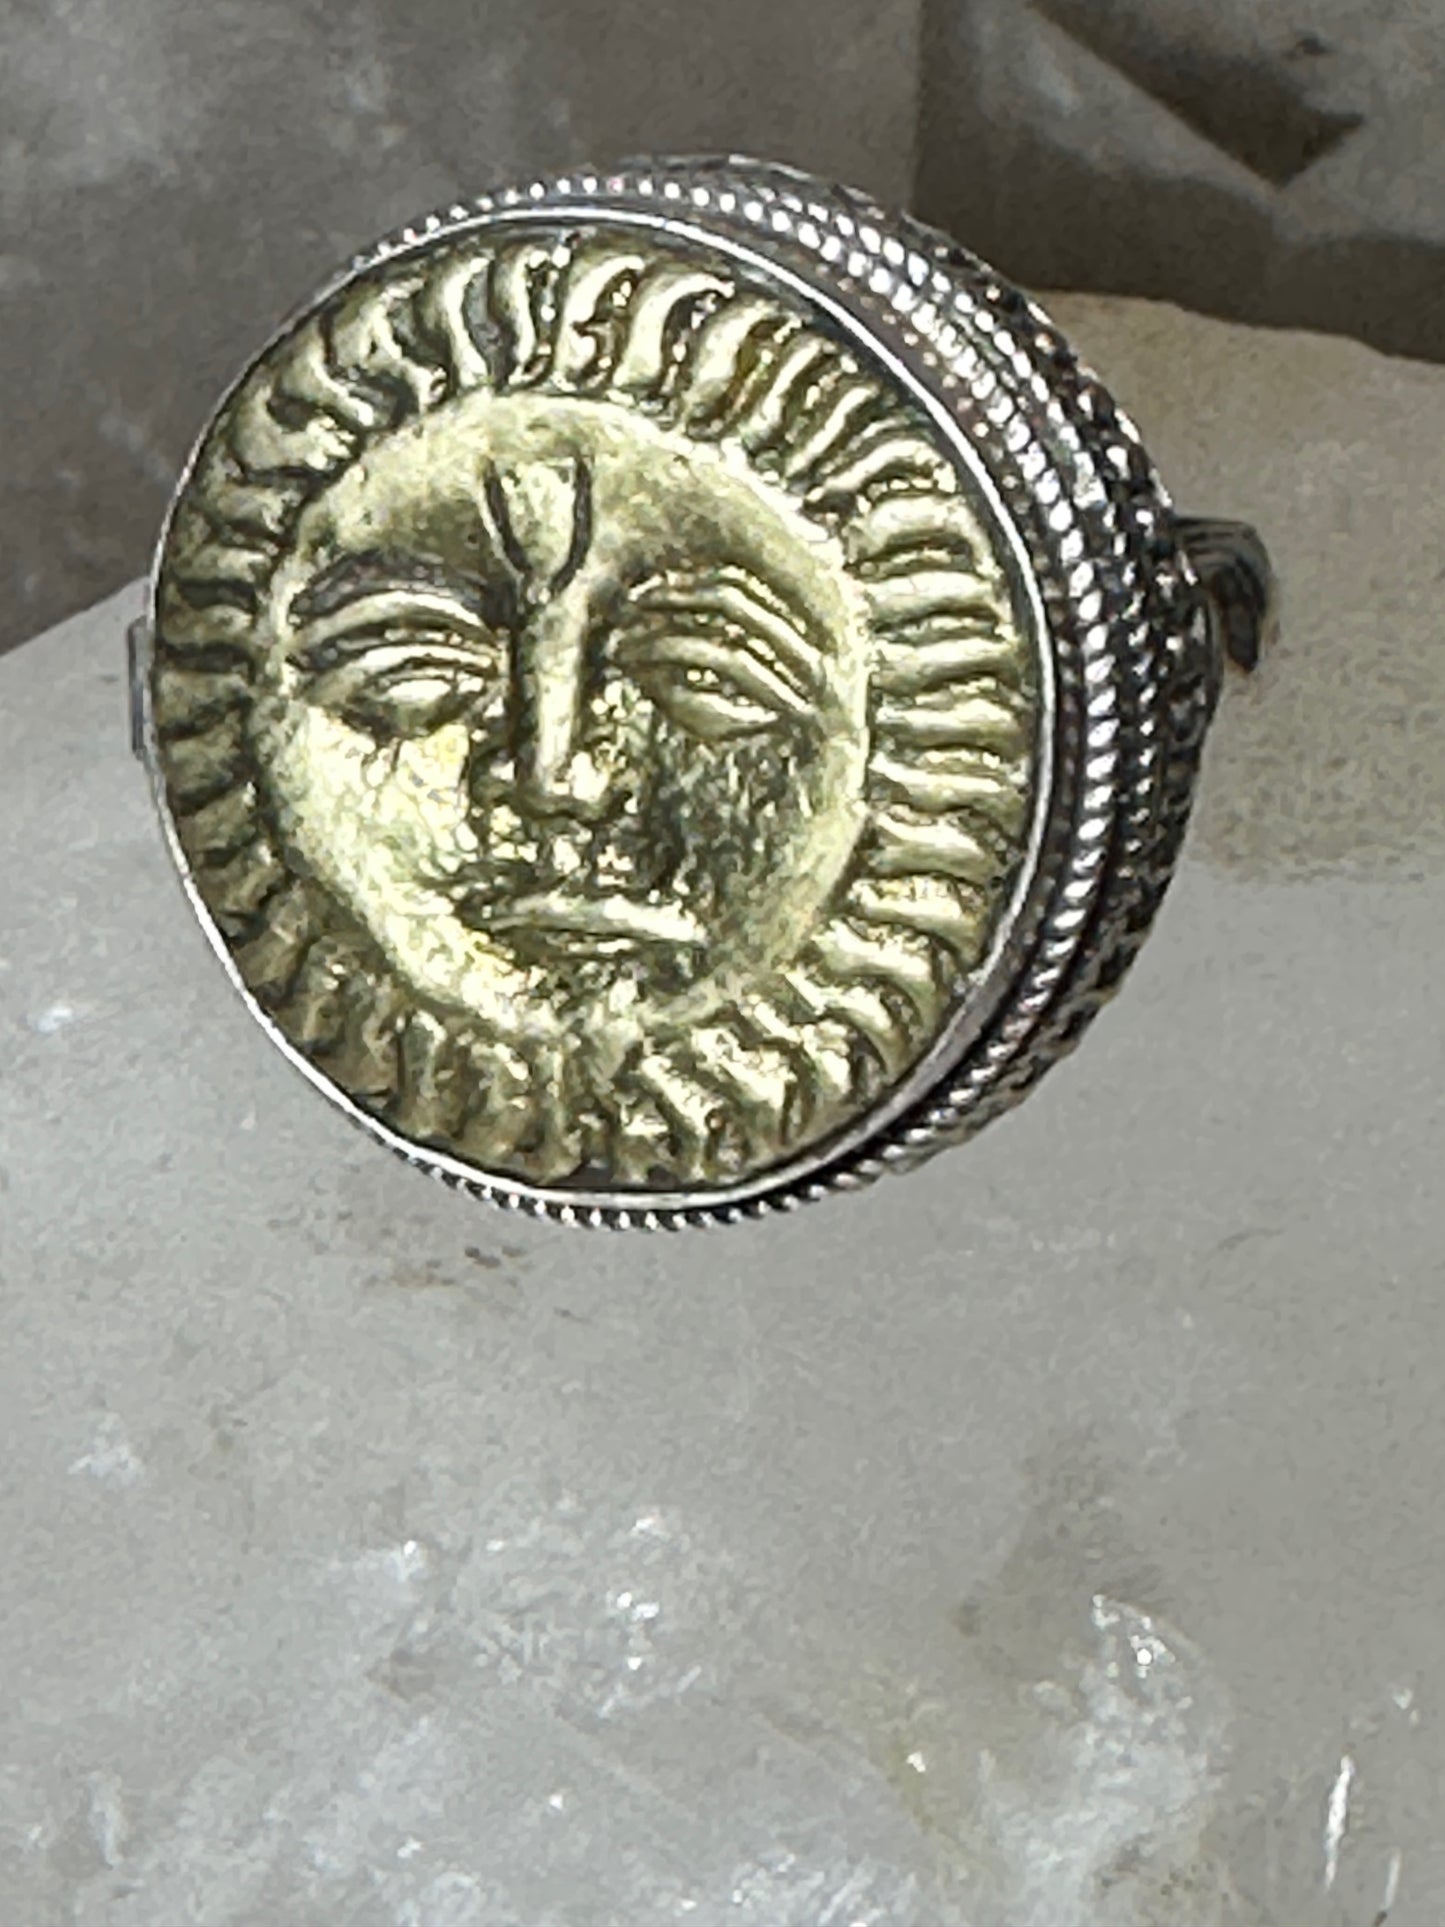 Poison ring size 7.50 Sun face celestial sterling silver women